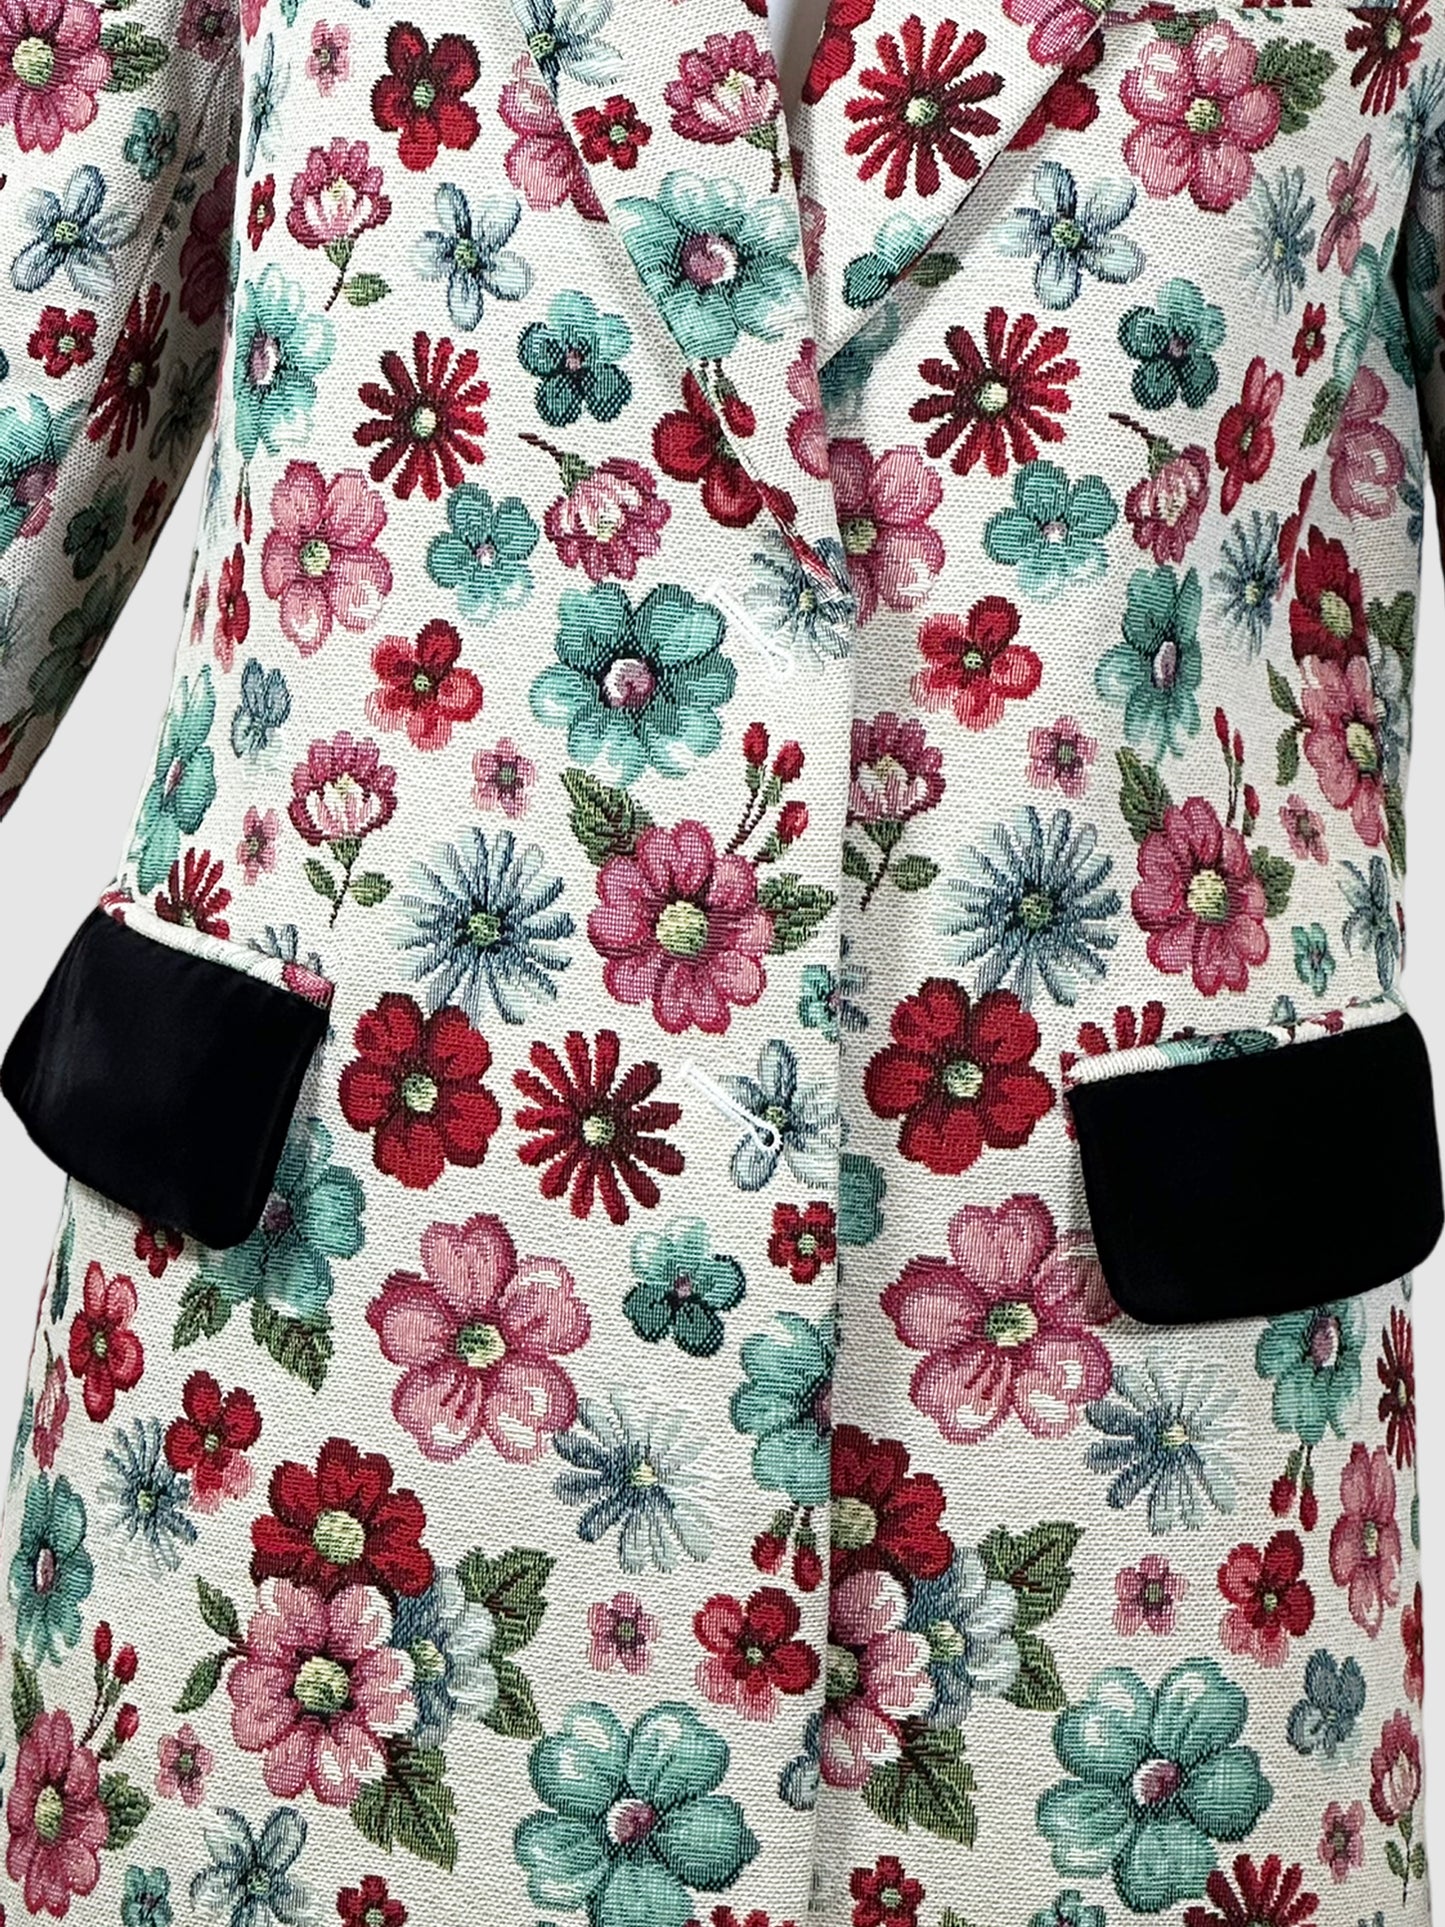 Smythe Floral Print Coat - Size 4